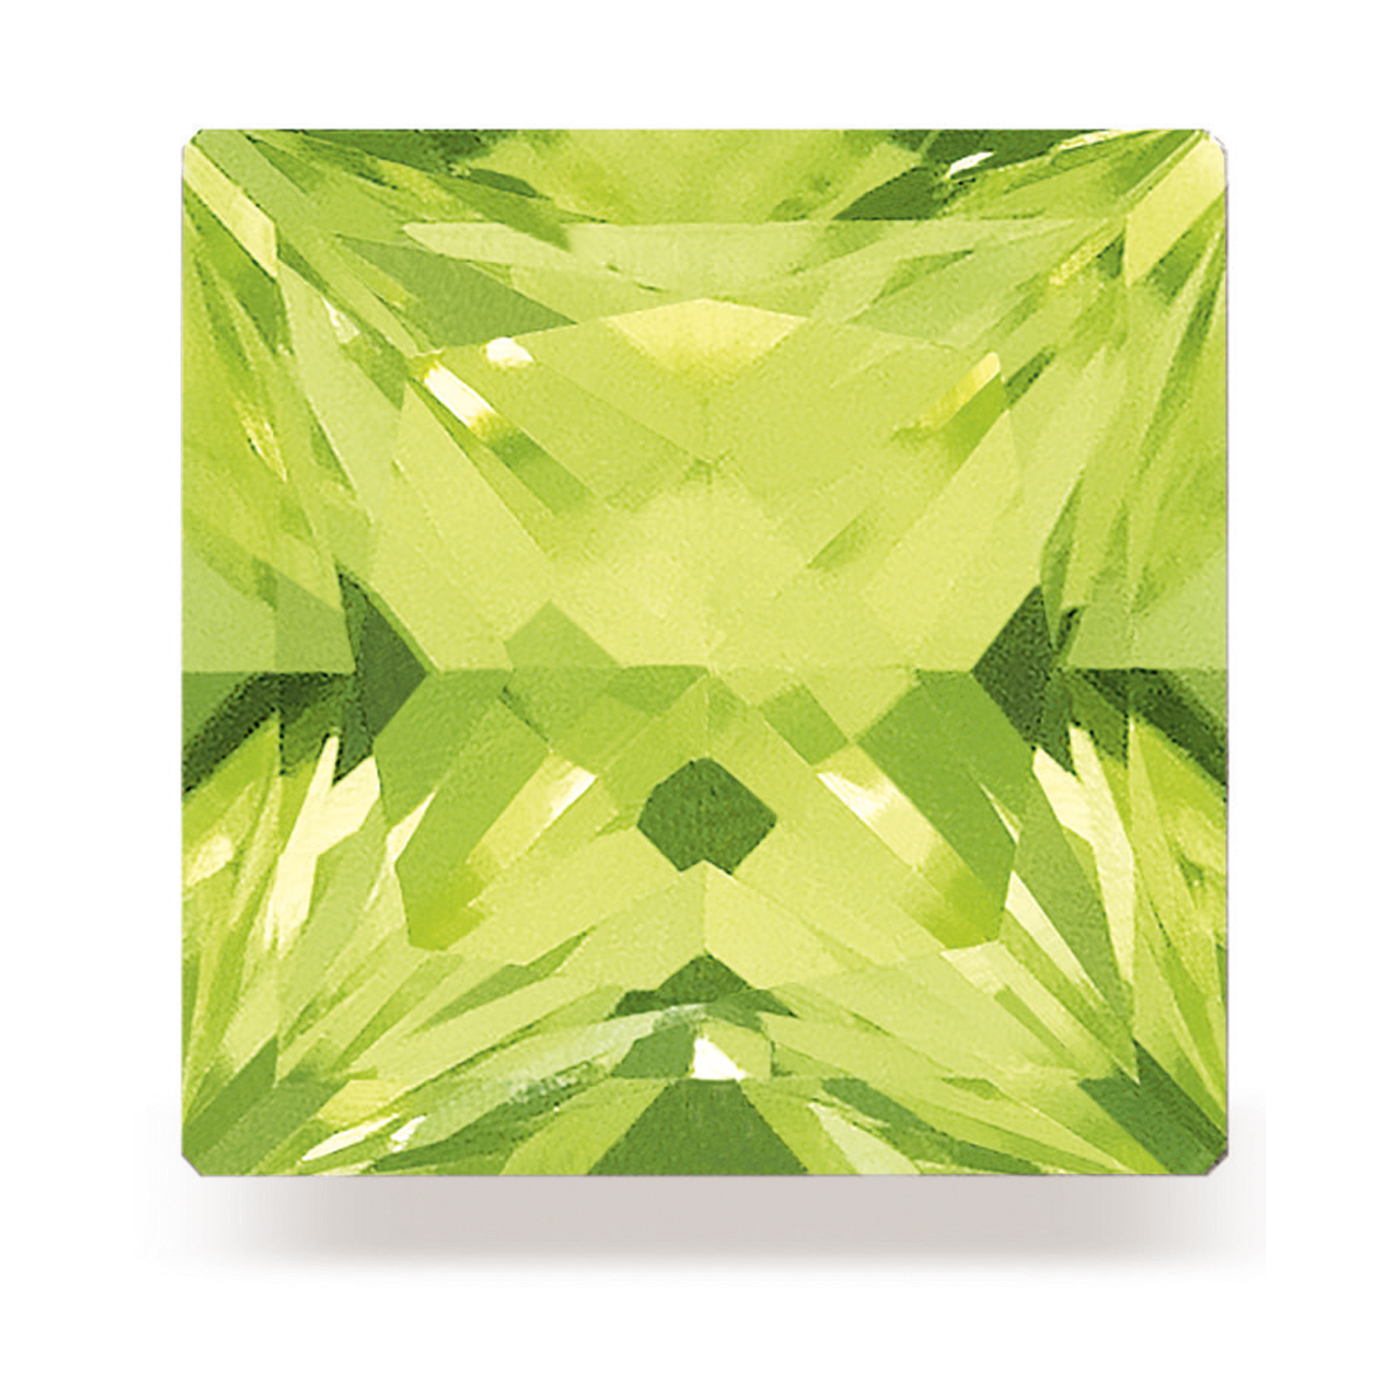 Swarovski Peridot, carré, facettiert, grün, 2,5 x 2,5 mm - 5 Stück